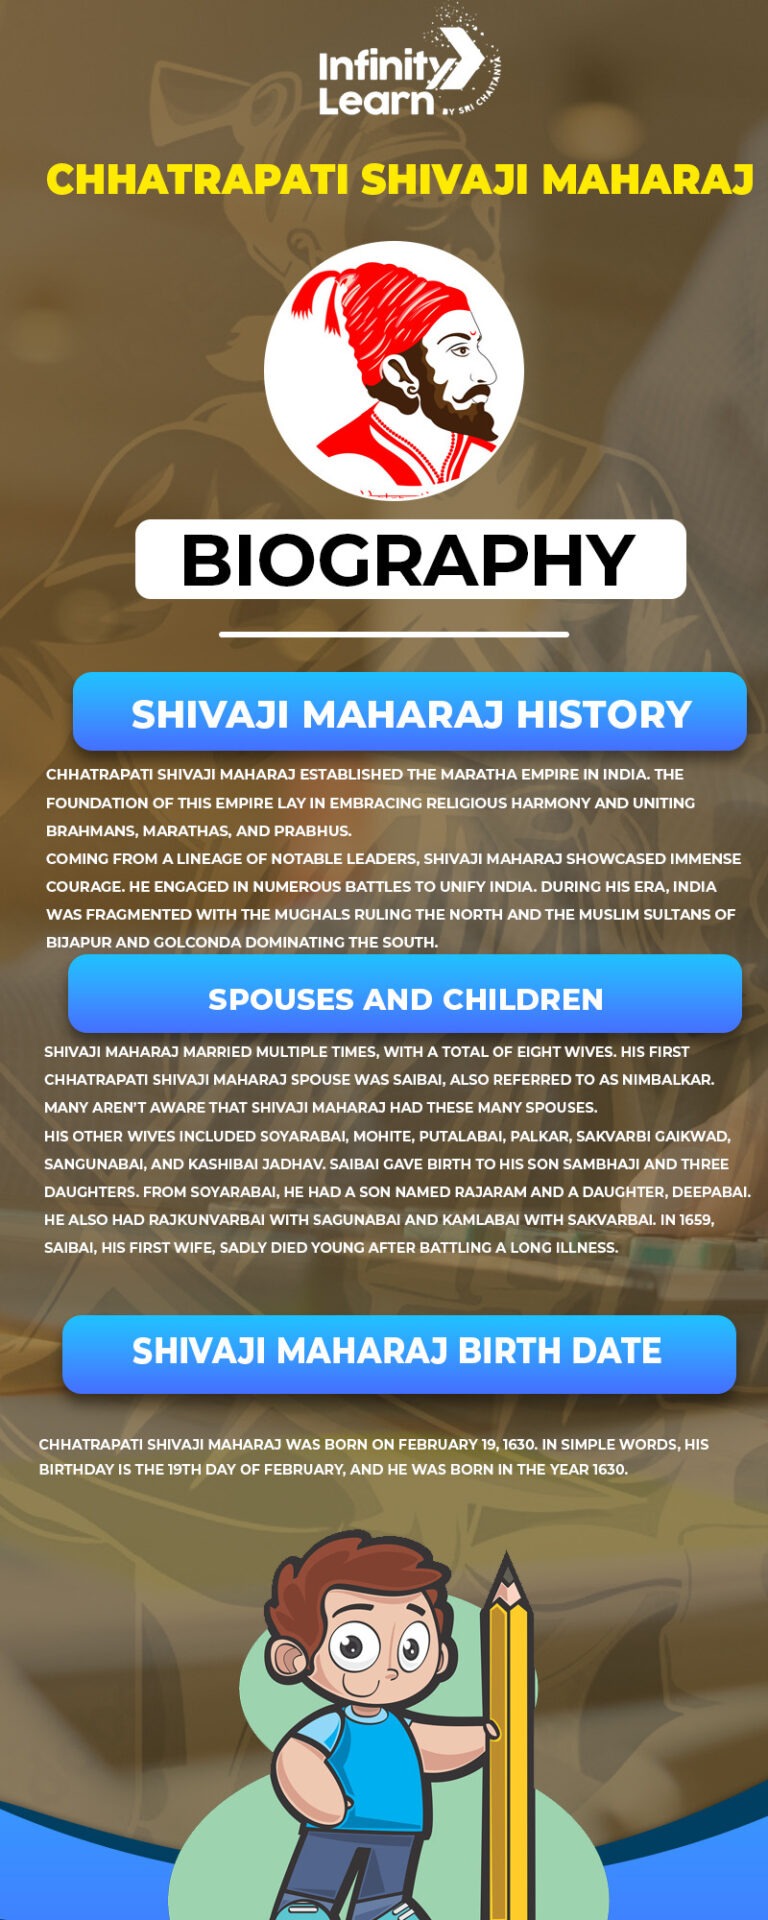 Chhatrapati Shivaji Maharaj Biography